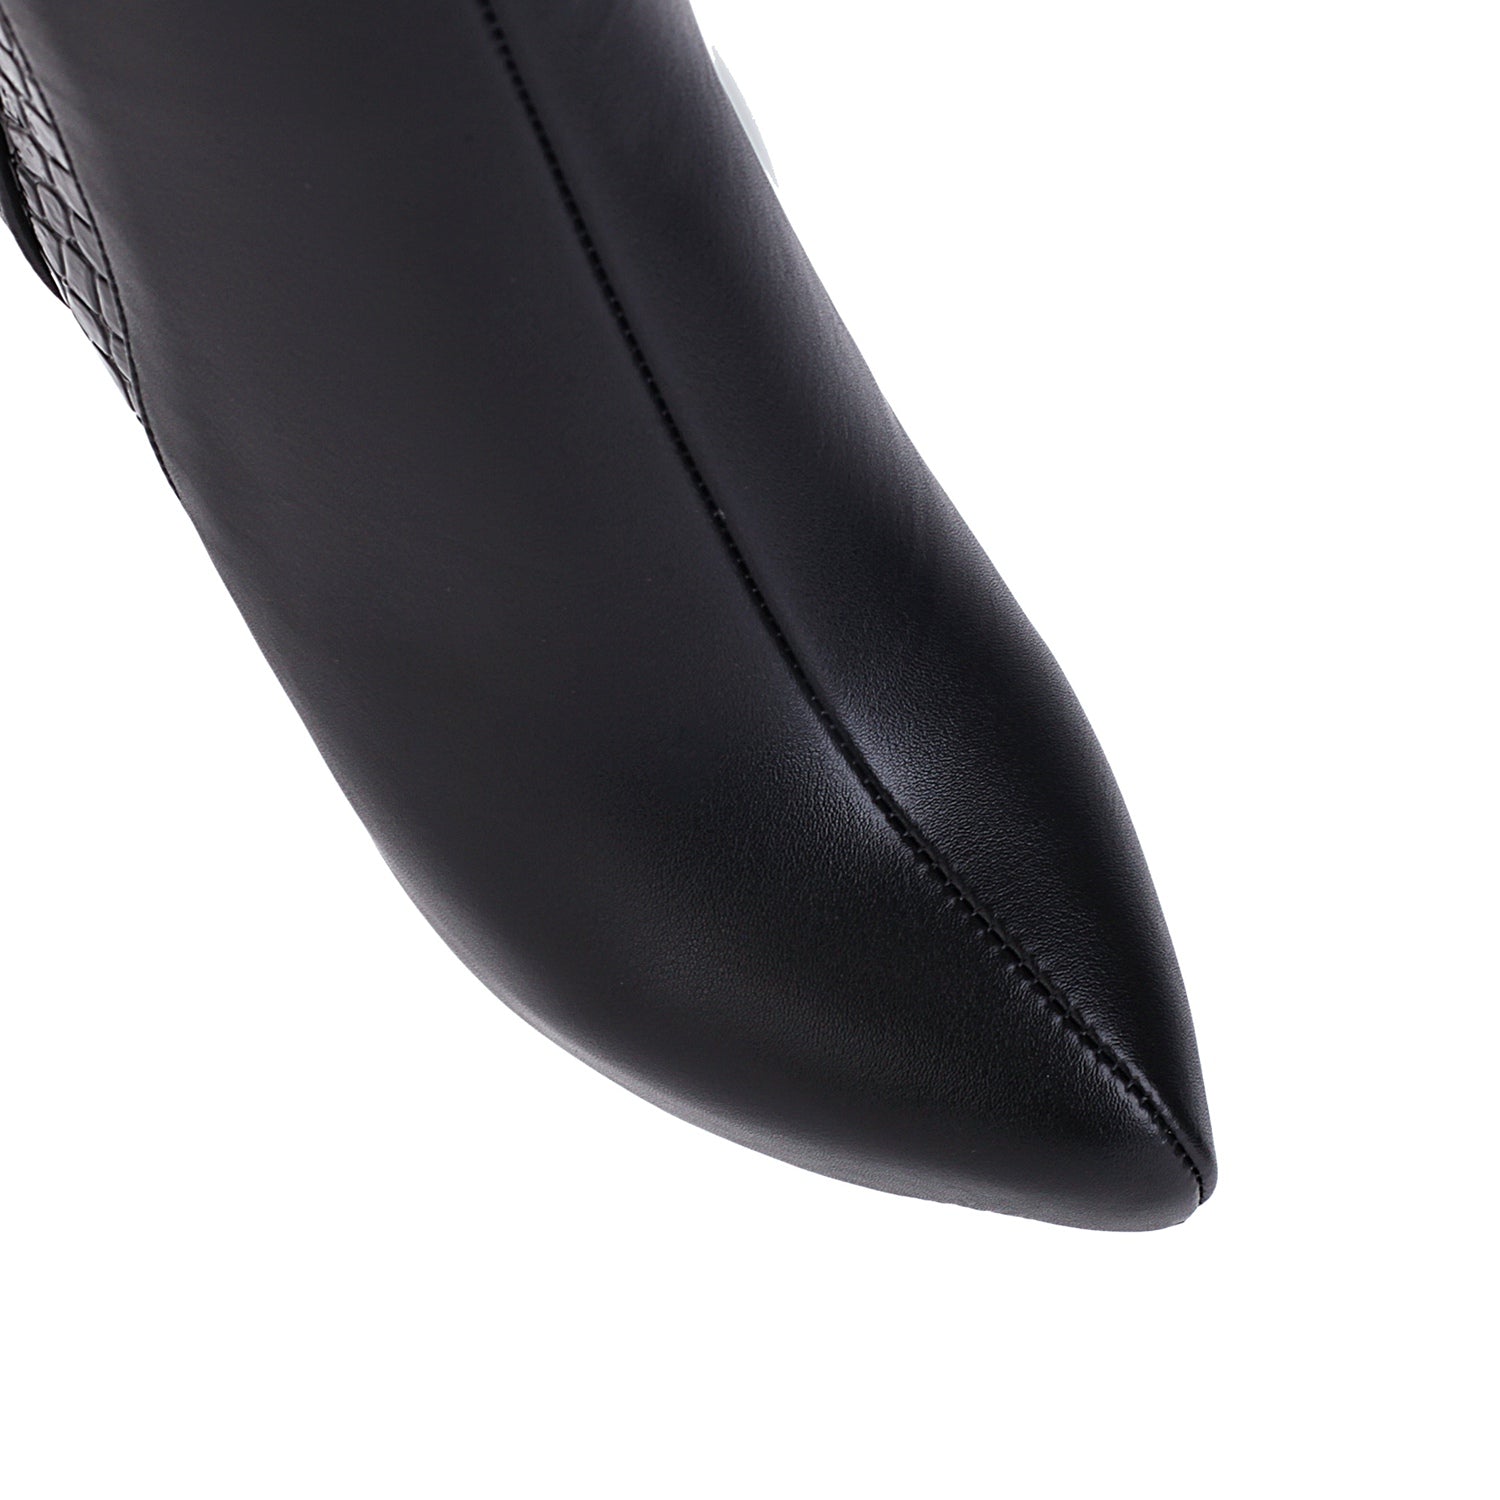 Bigsizeheels Sexy chunky heel platform all-match boots - Black freeshipping - bigsizeheel®-size5-size15 -All Plus Sizes Available!